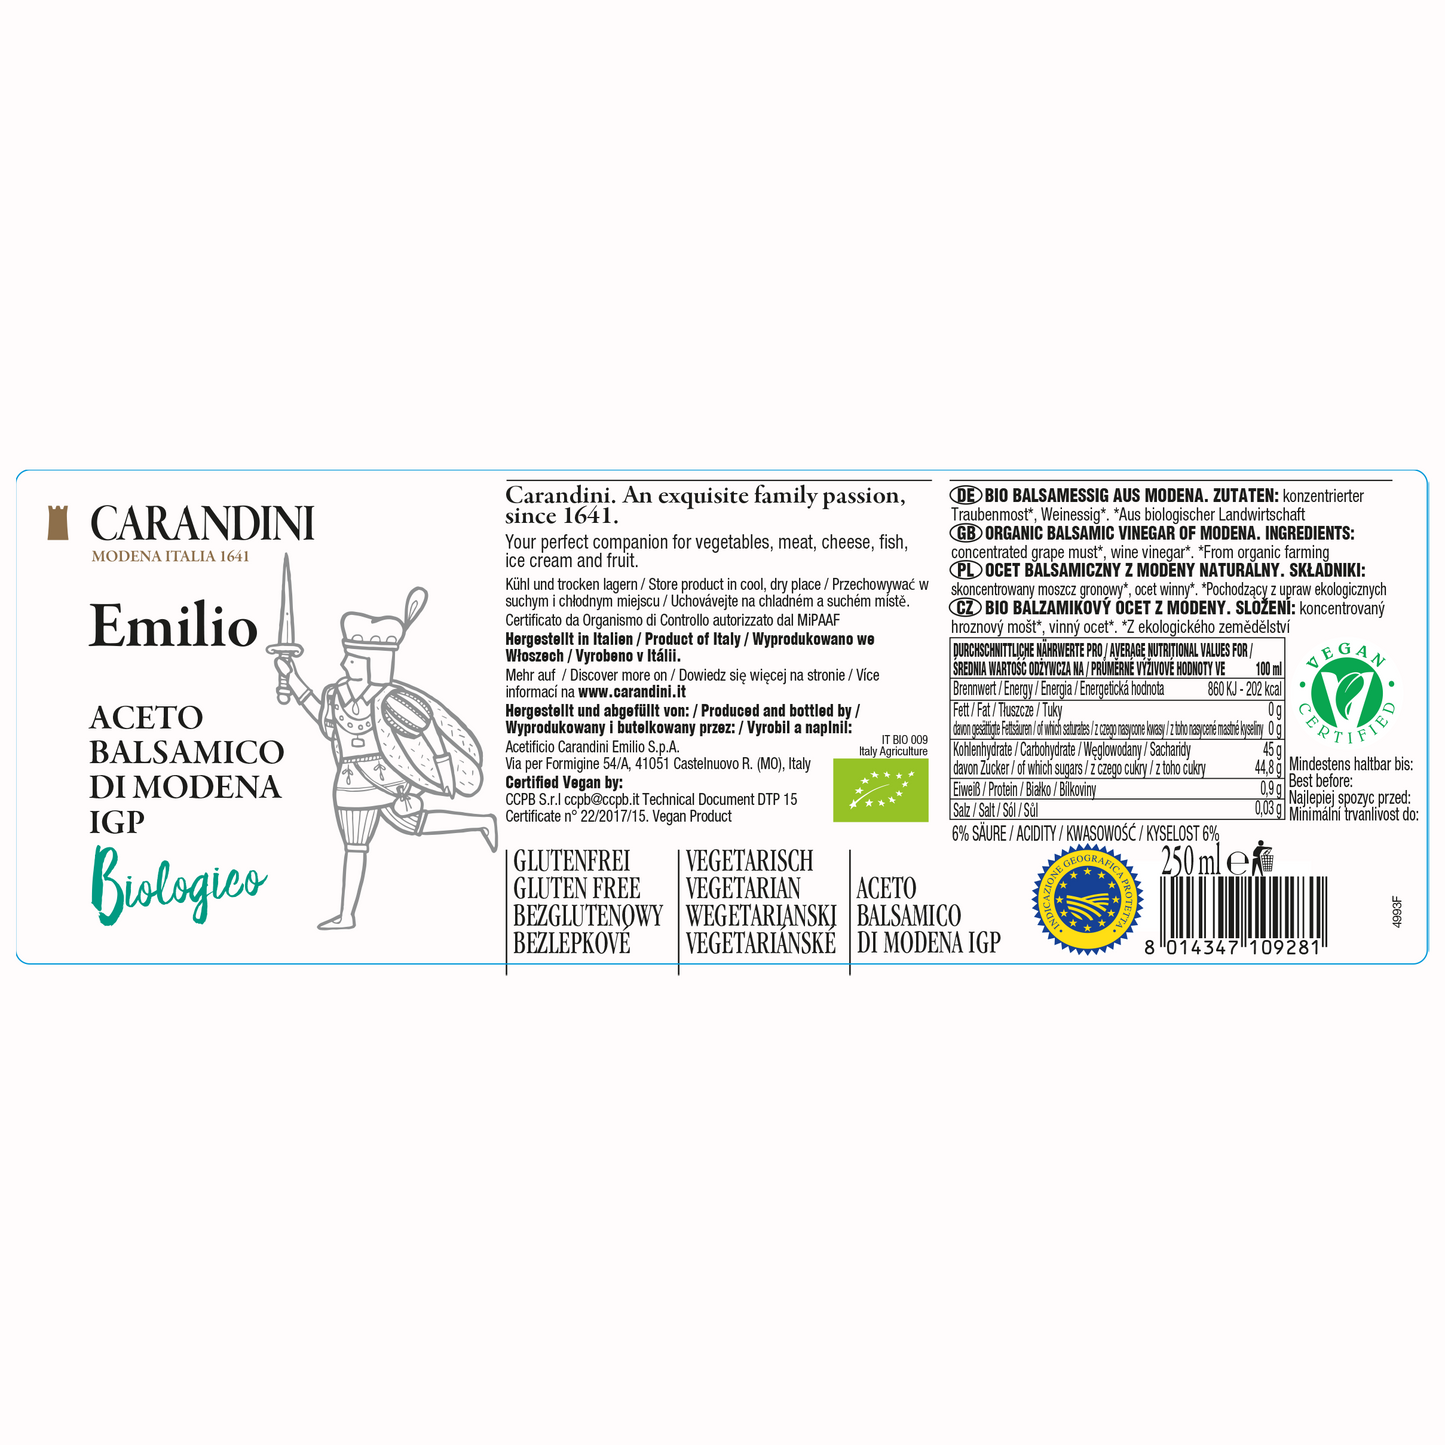 Emilio Silver Organic Balsamic Vinegar of Modena PGI